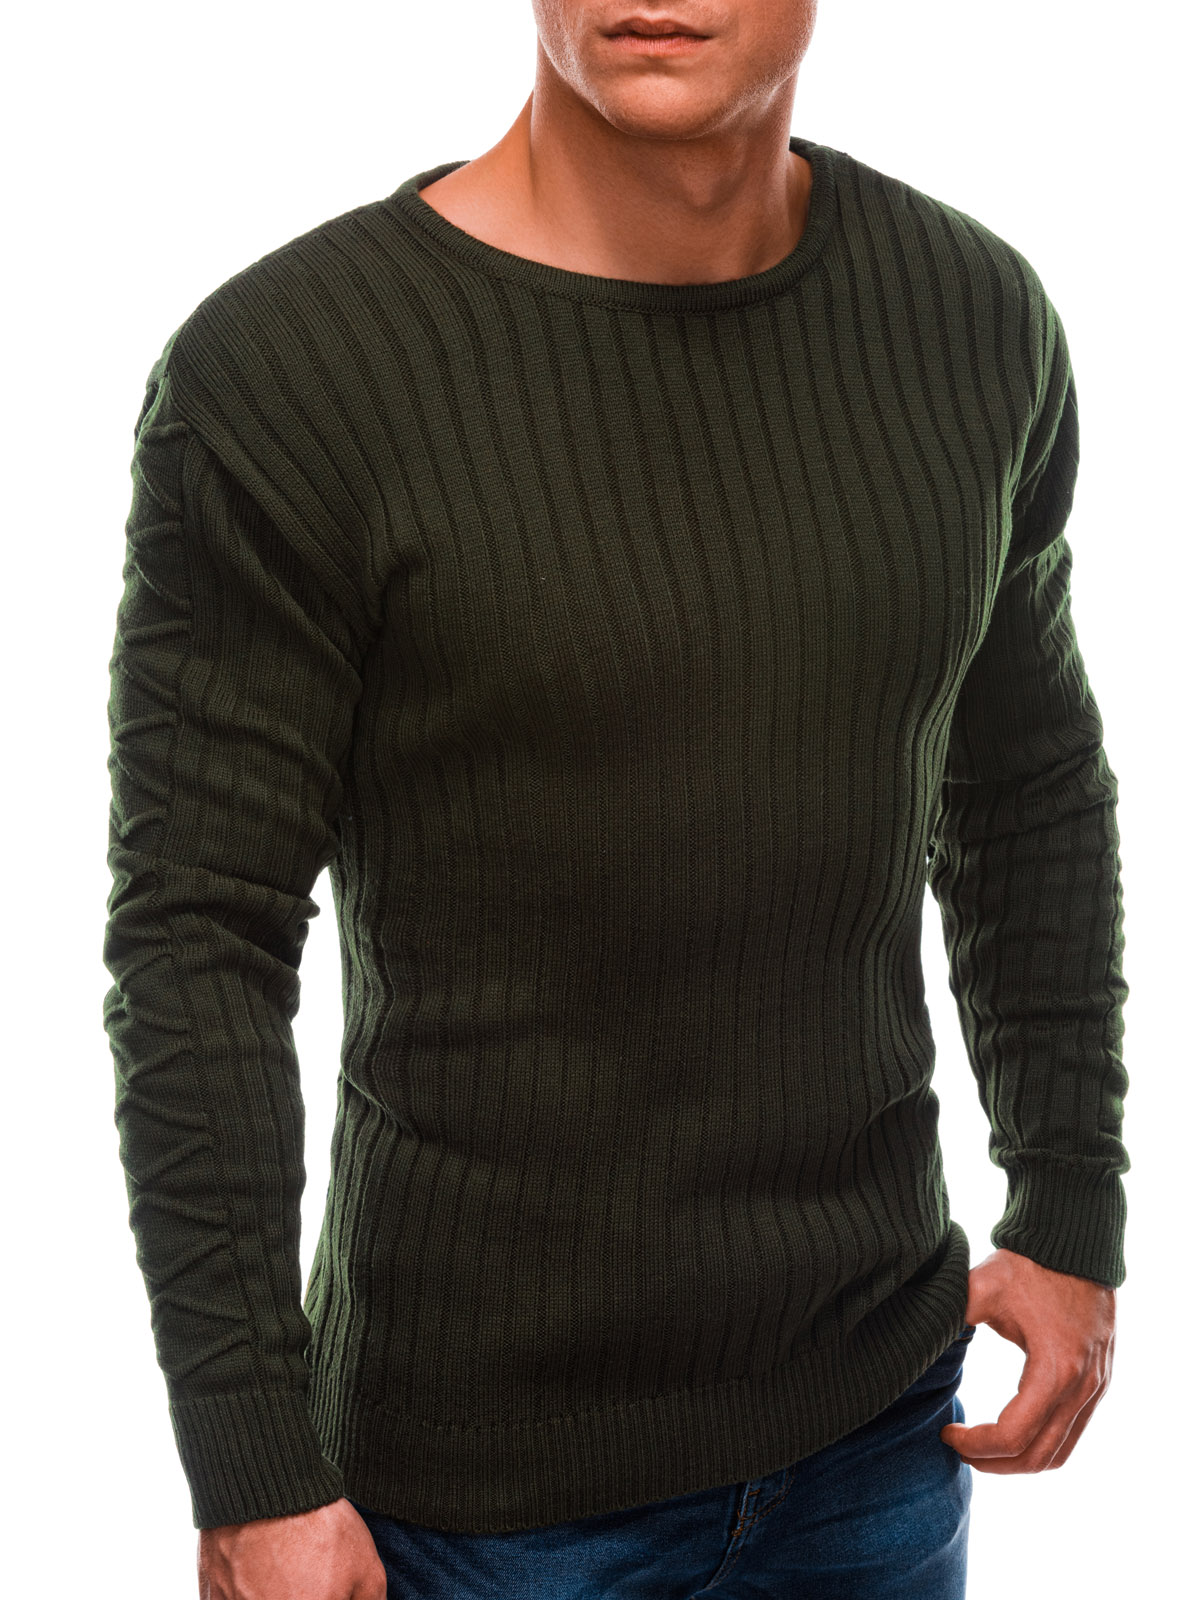 Men's sweater E201 - dark olive | MODONE wholesale - Clothing For Men